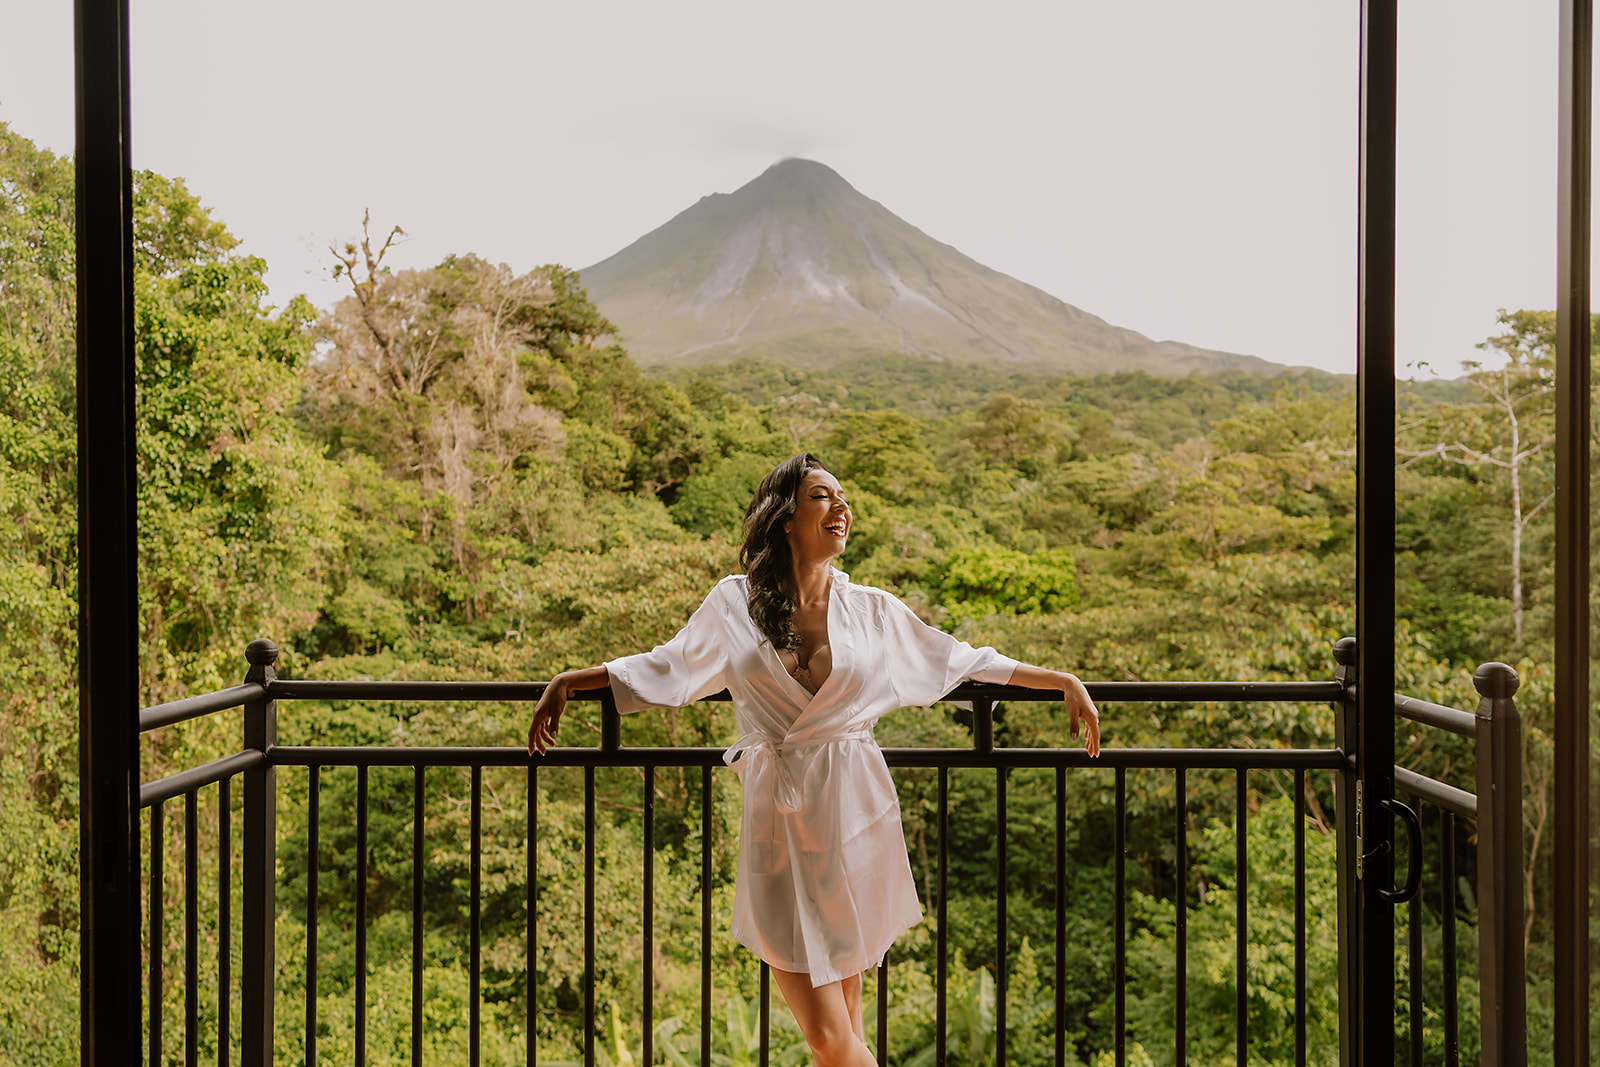 Explore Costa Rica's iconic destinations with Find My Costa Rica!